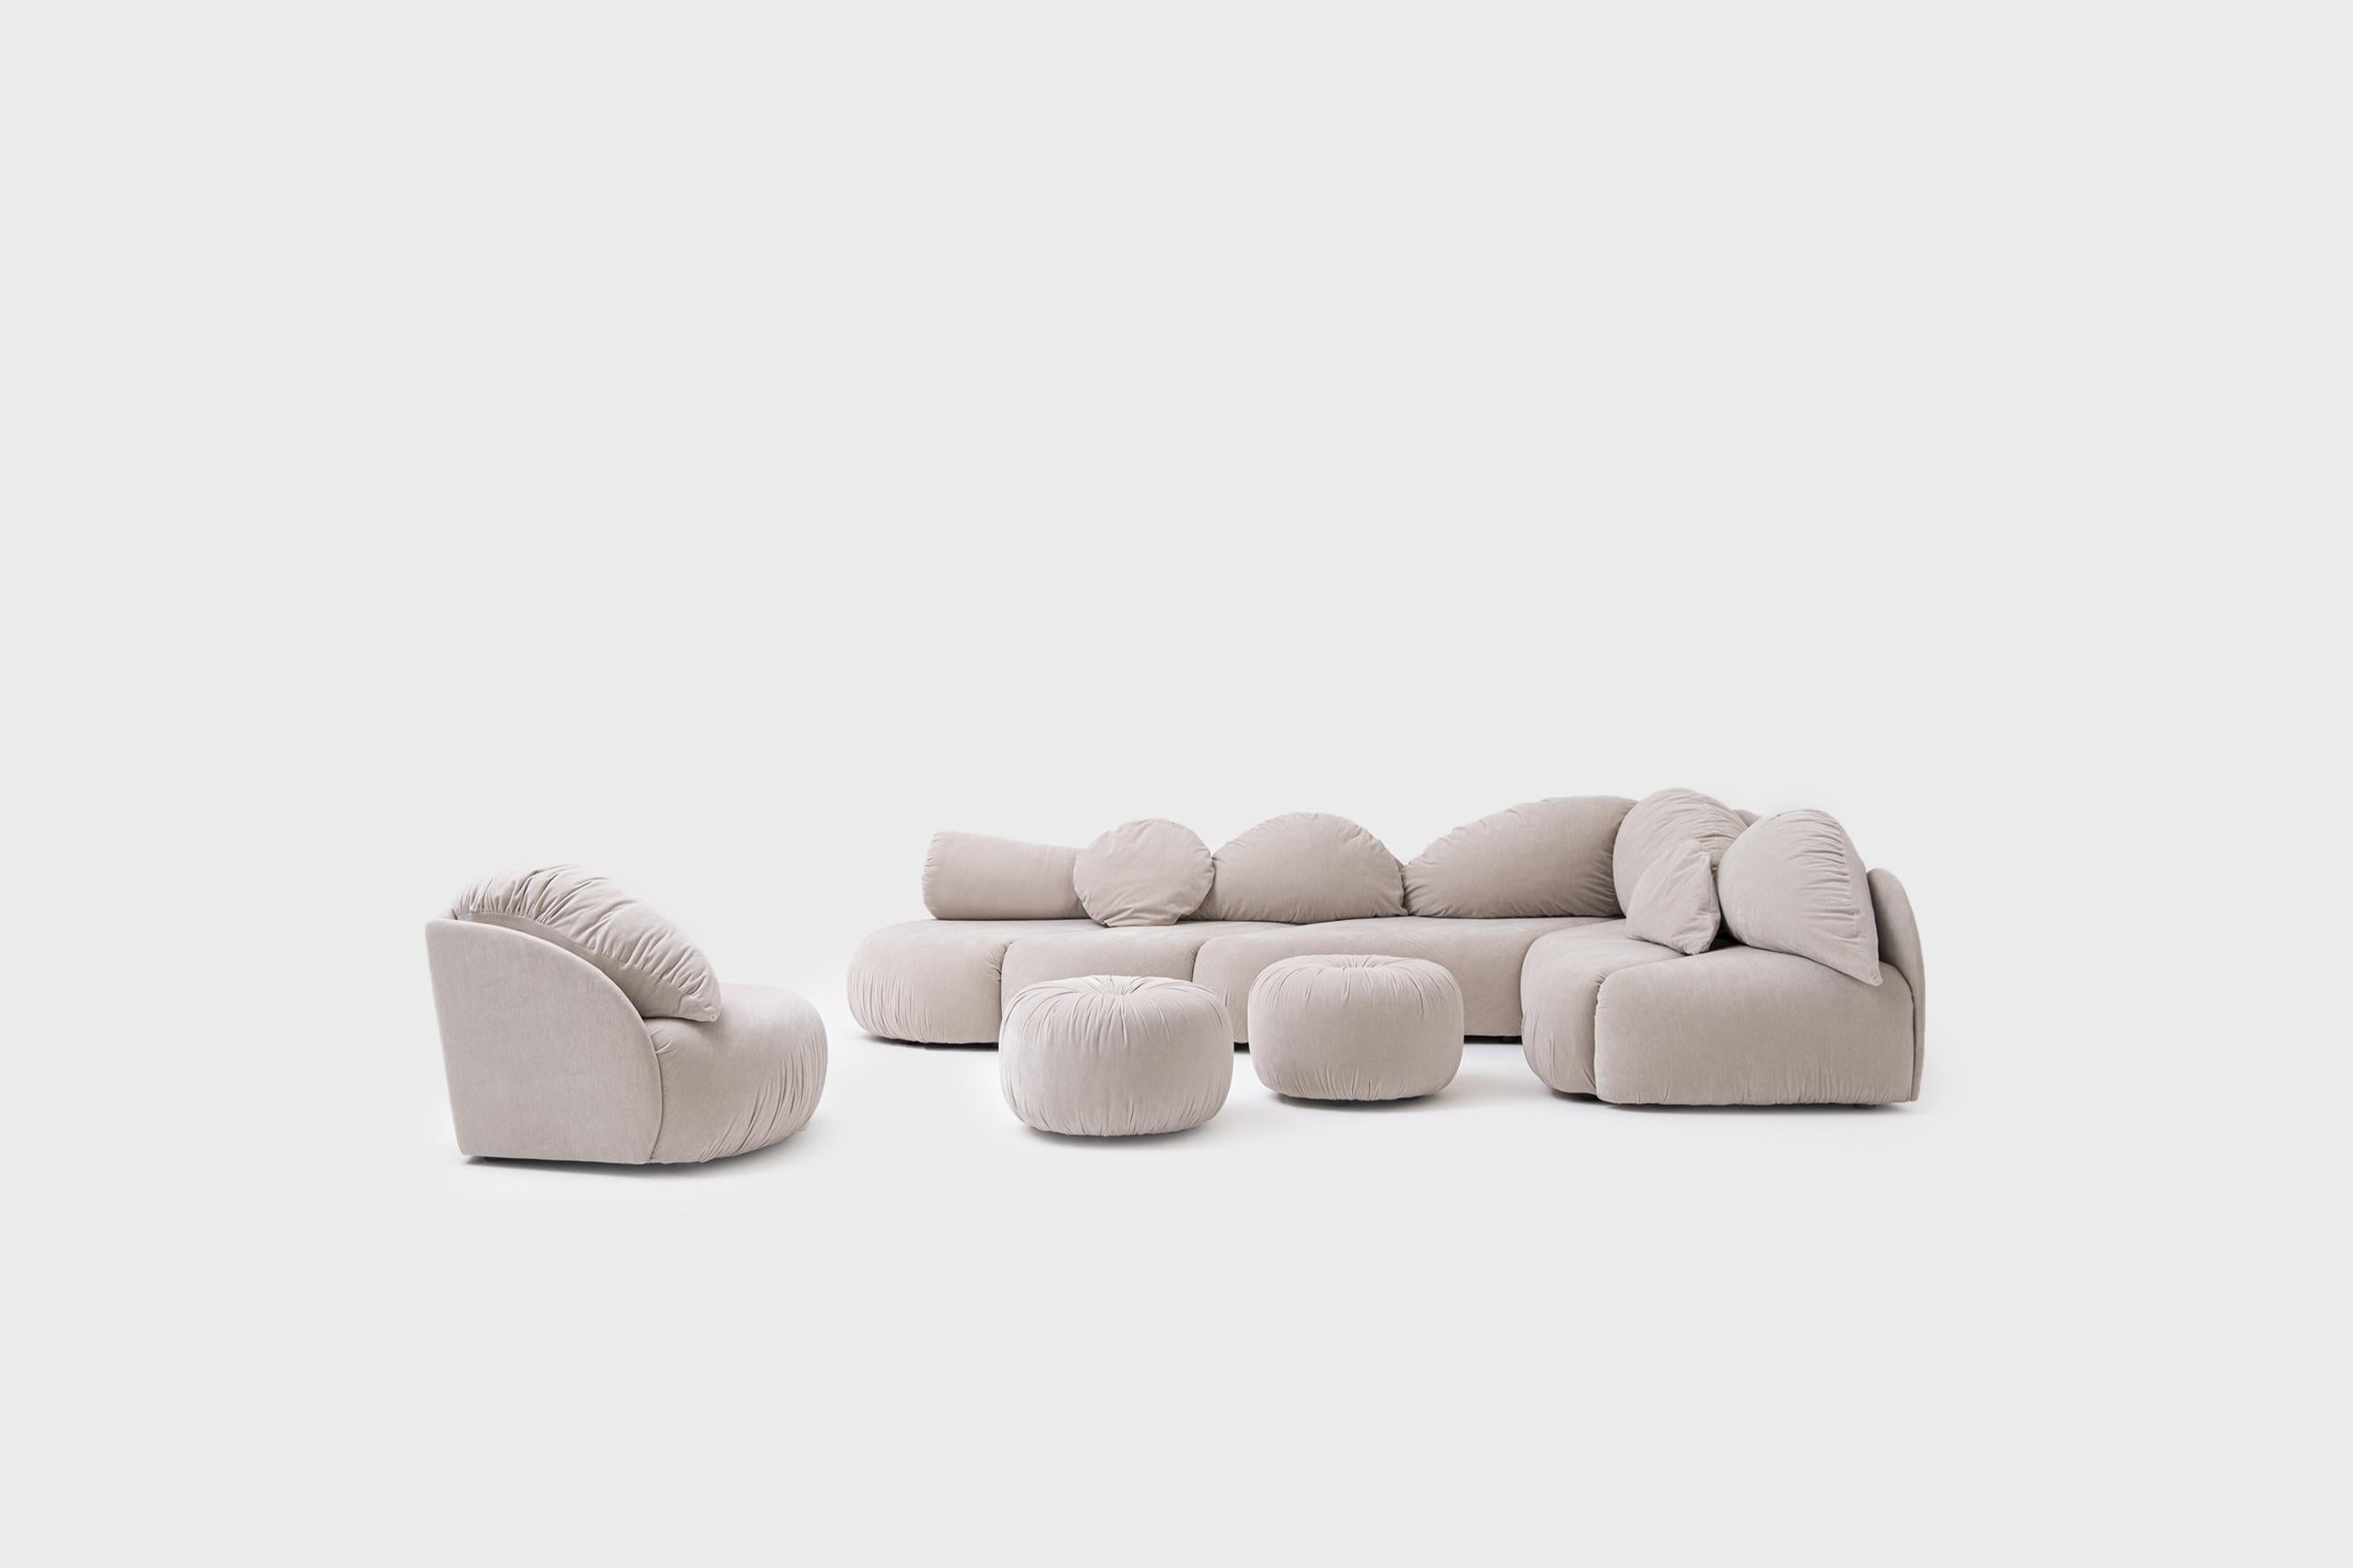 Late 20th Century Sculptural Sectional Sofa Group by Wiener Werstätten, 1970